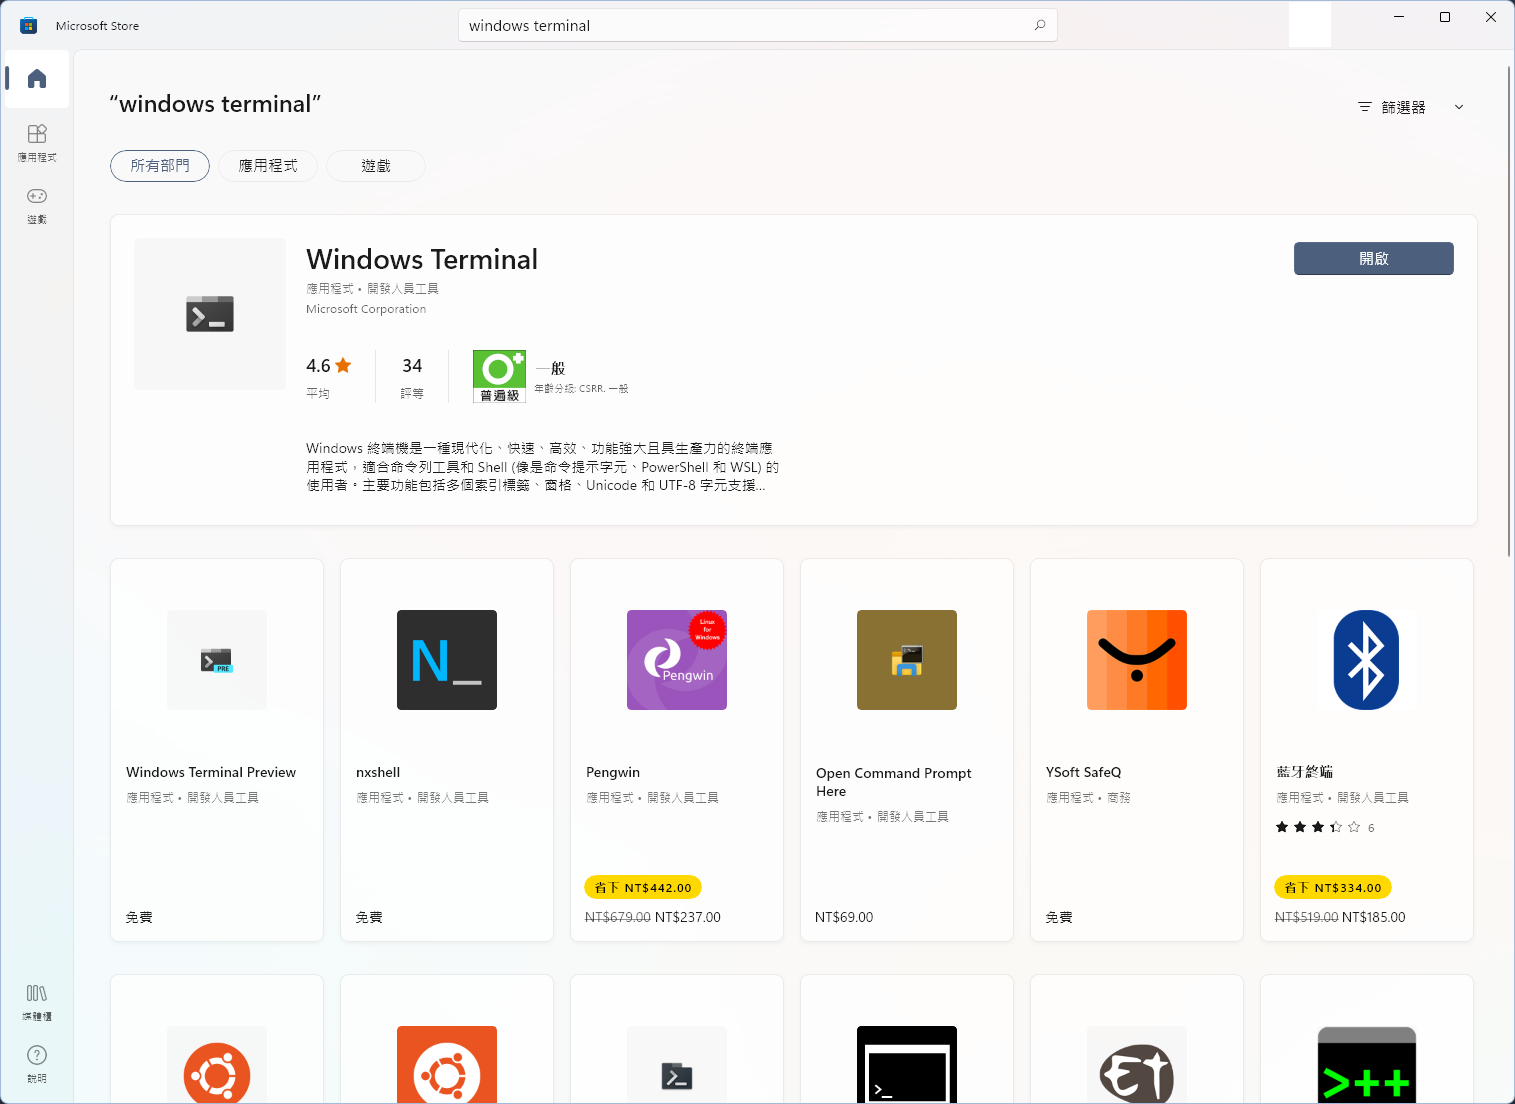 Windows Terminal app on Microsoft Store